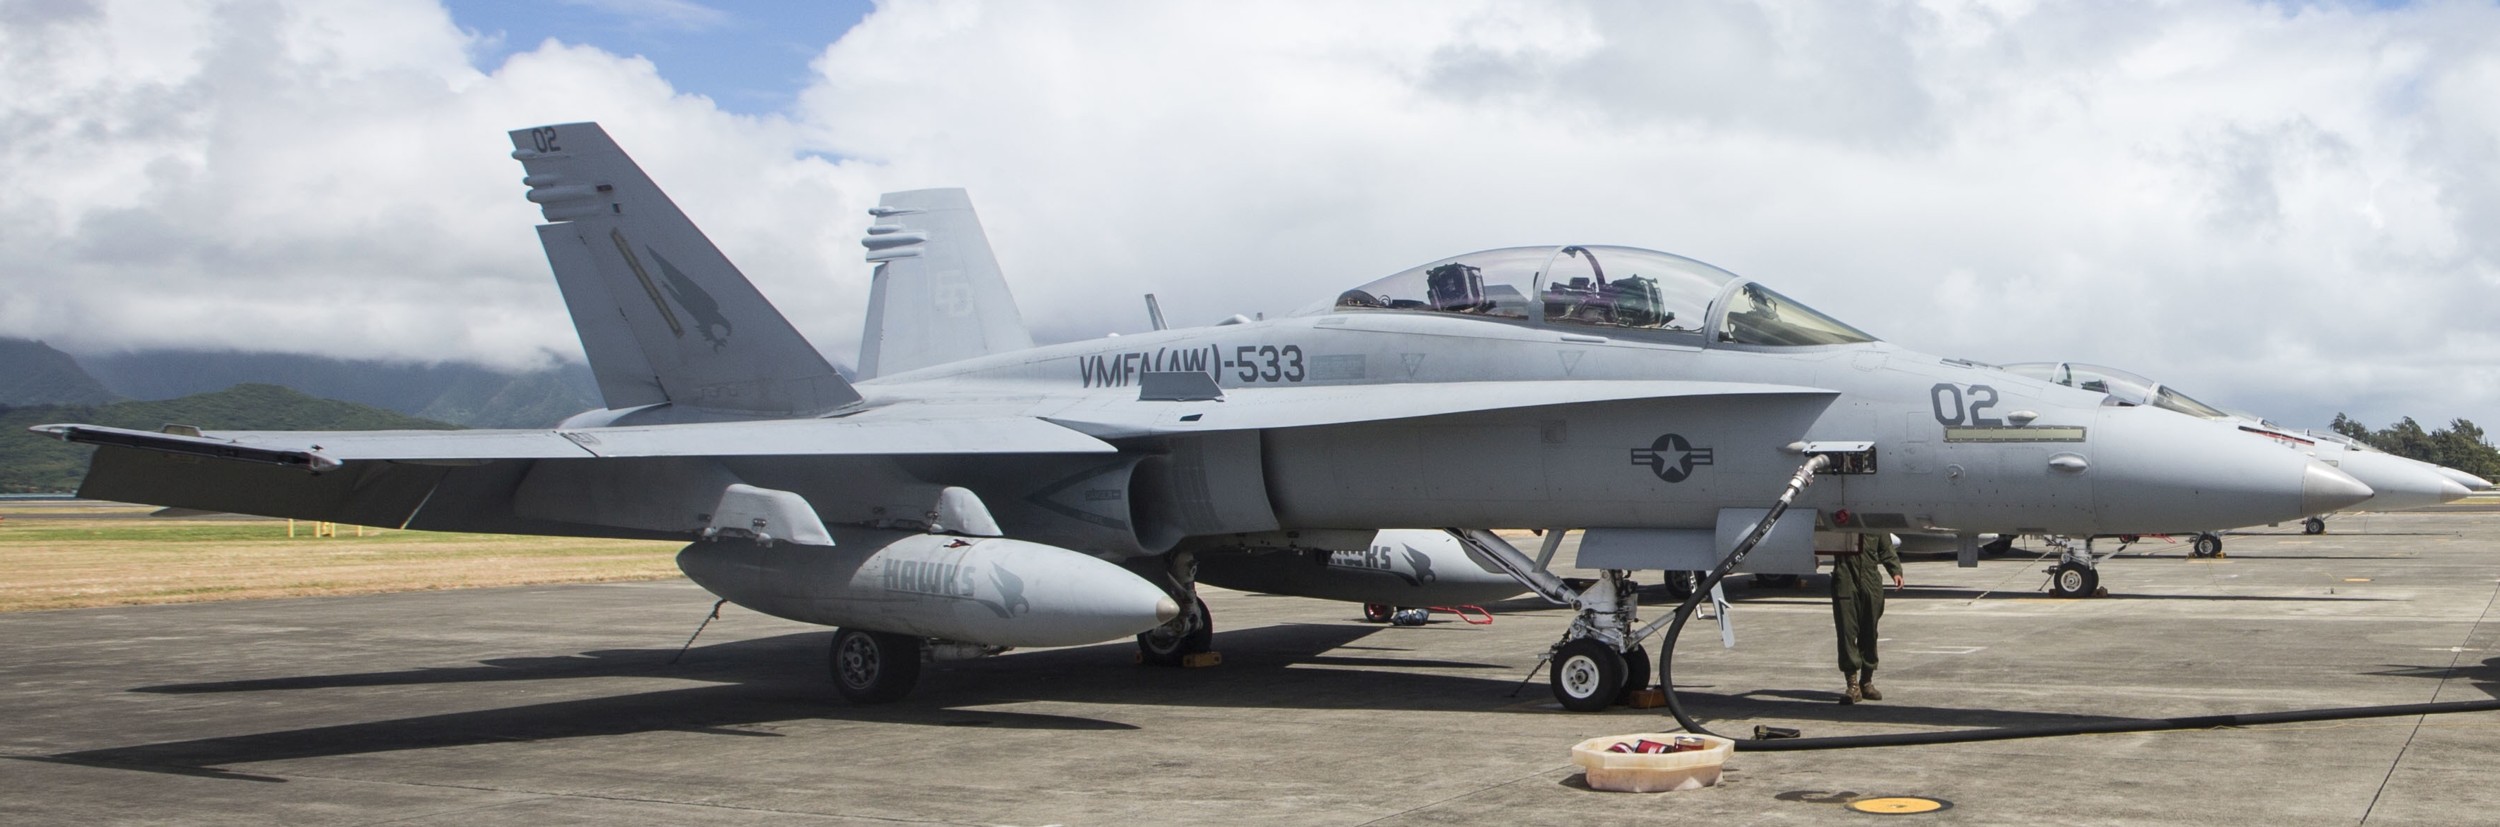 vmfa(aw)-533 hawks marine fighter attack squadron usmc f/a-18d hornet 52 kaneohe bay usmc